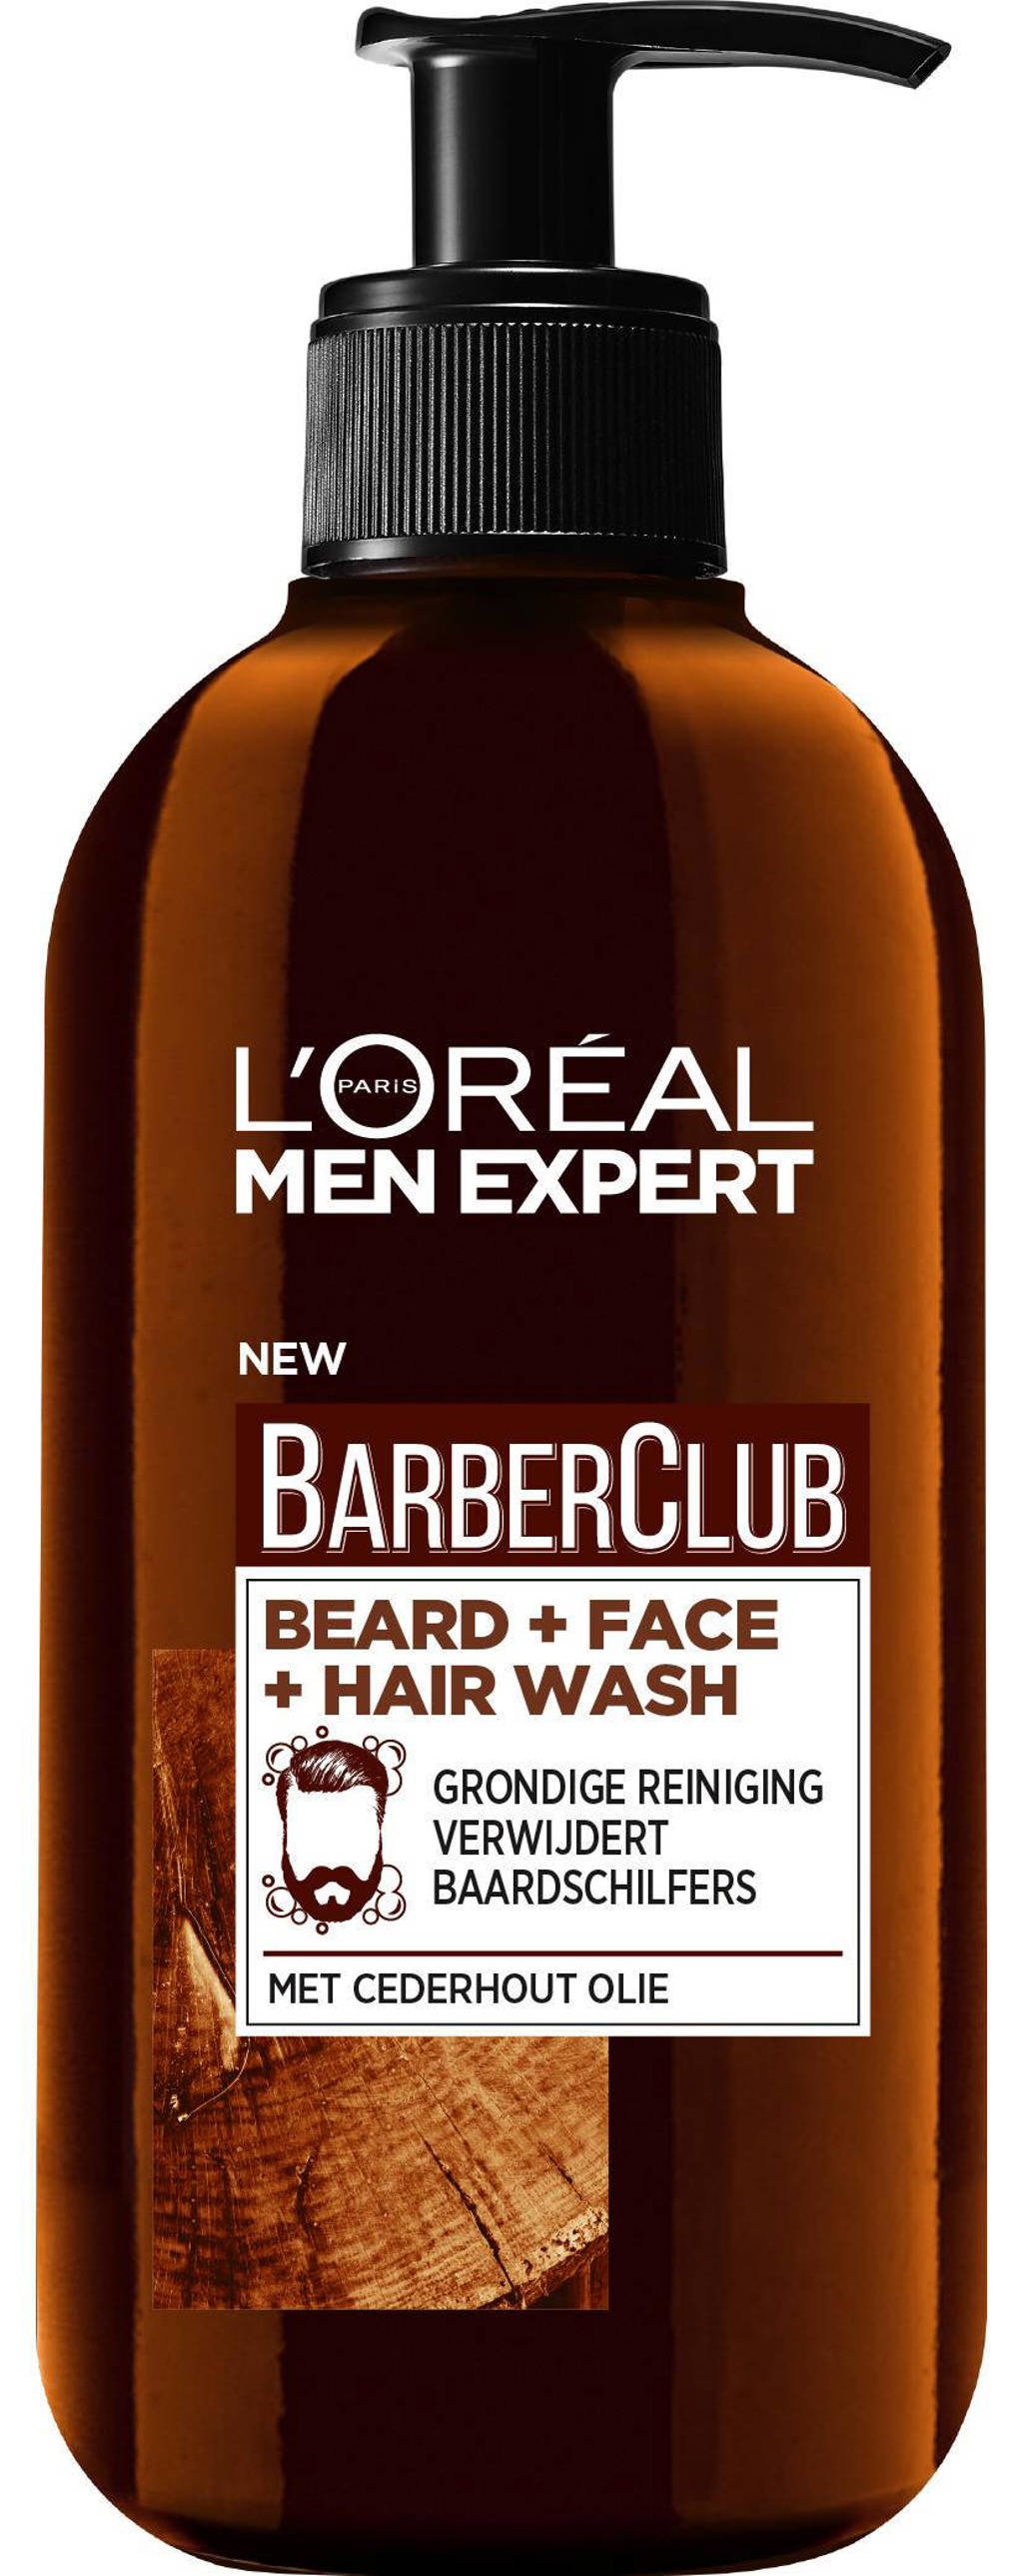 L'Oréal Paris Men Expert BarberClub Beard + Face + Hair baardshampoo - 200 ml